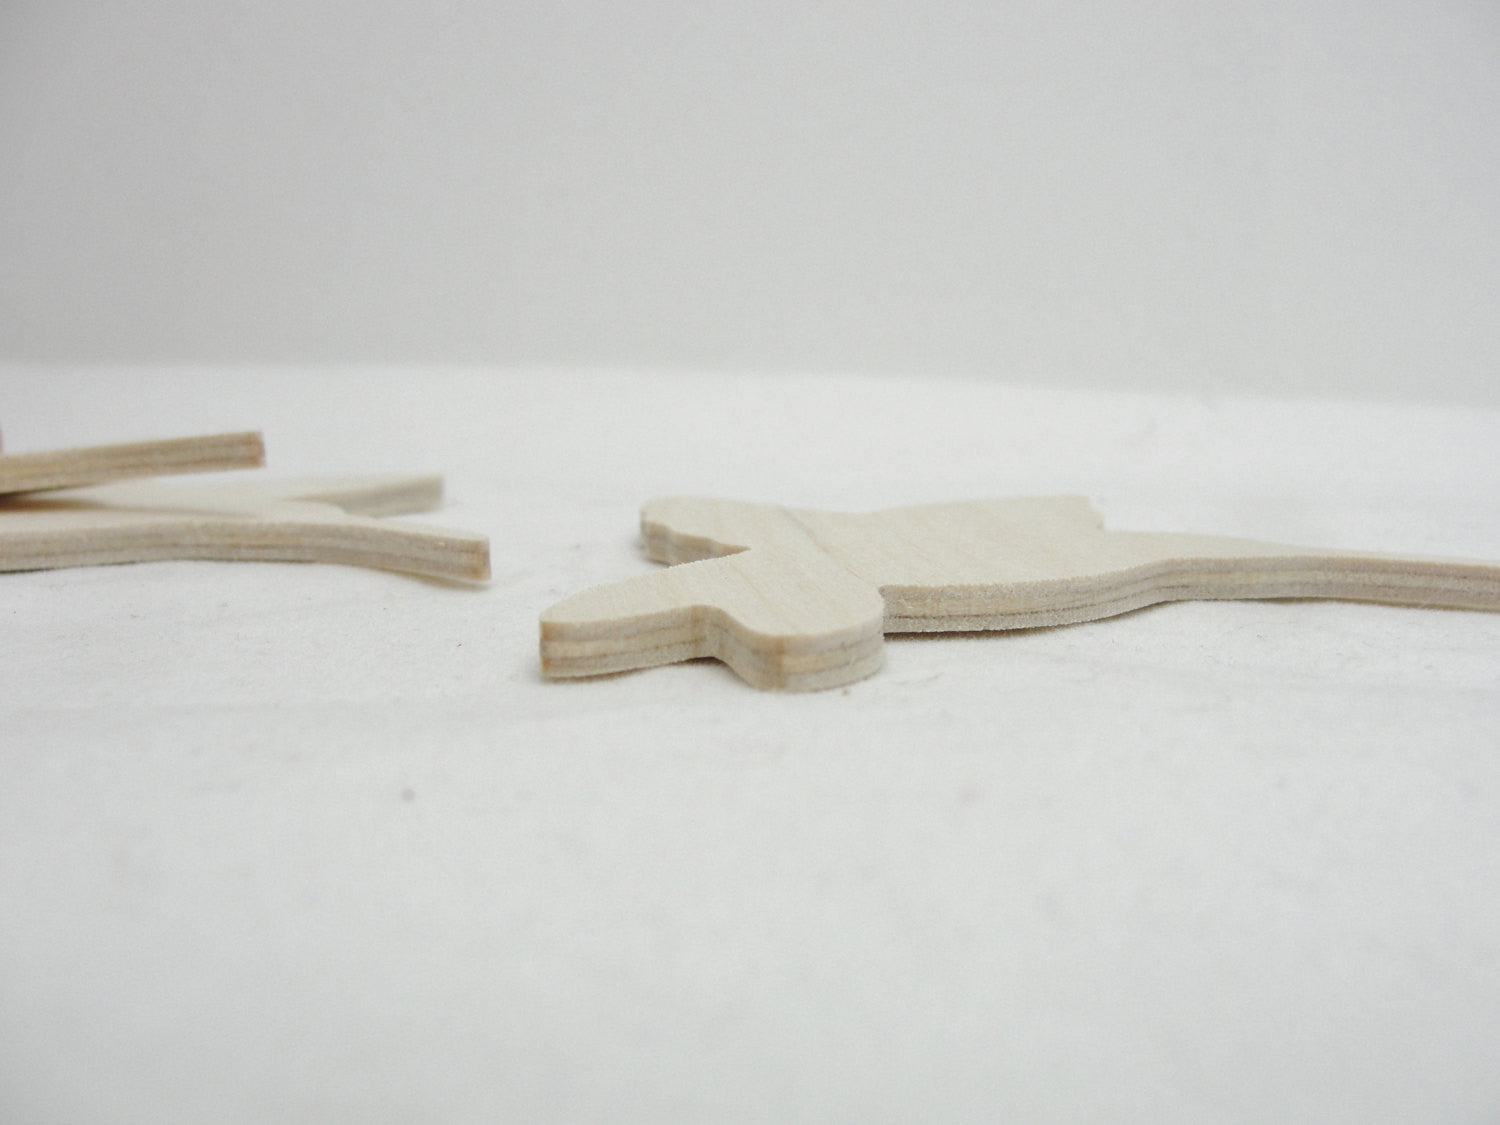 Hummingbird cutouts set of 4 - Wood parts - Craft Supply House